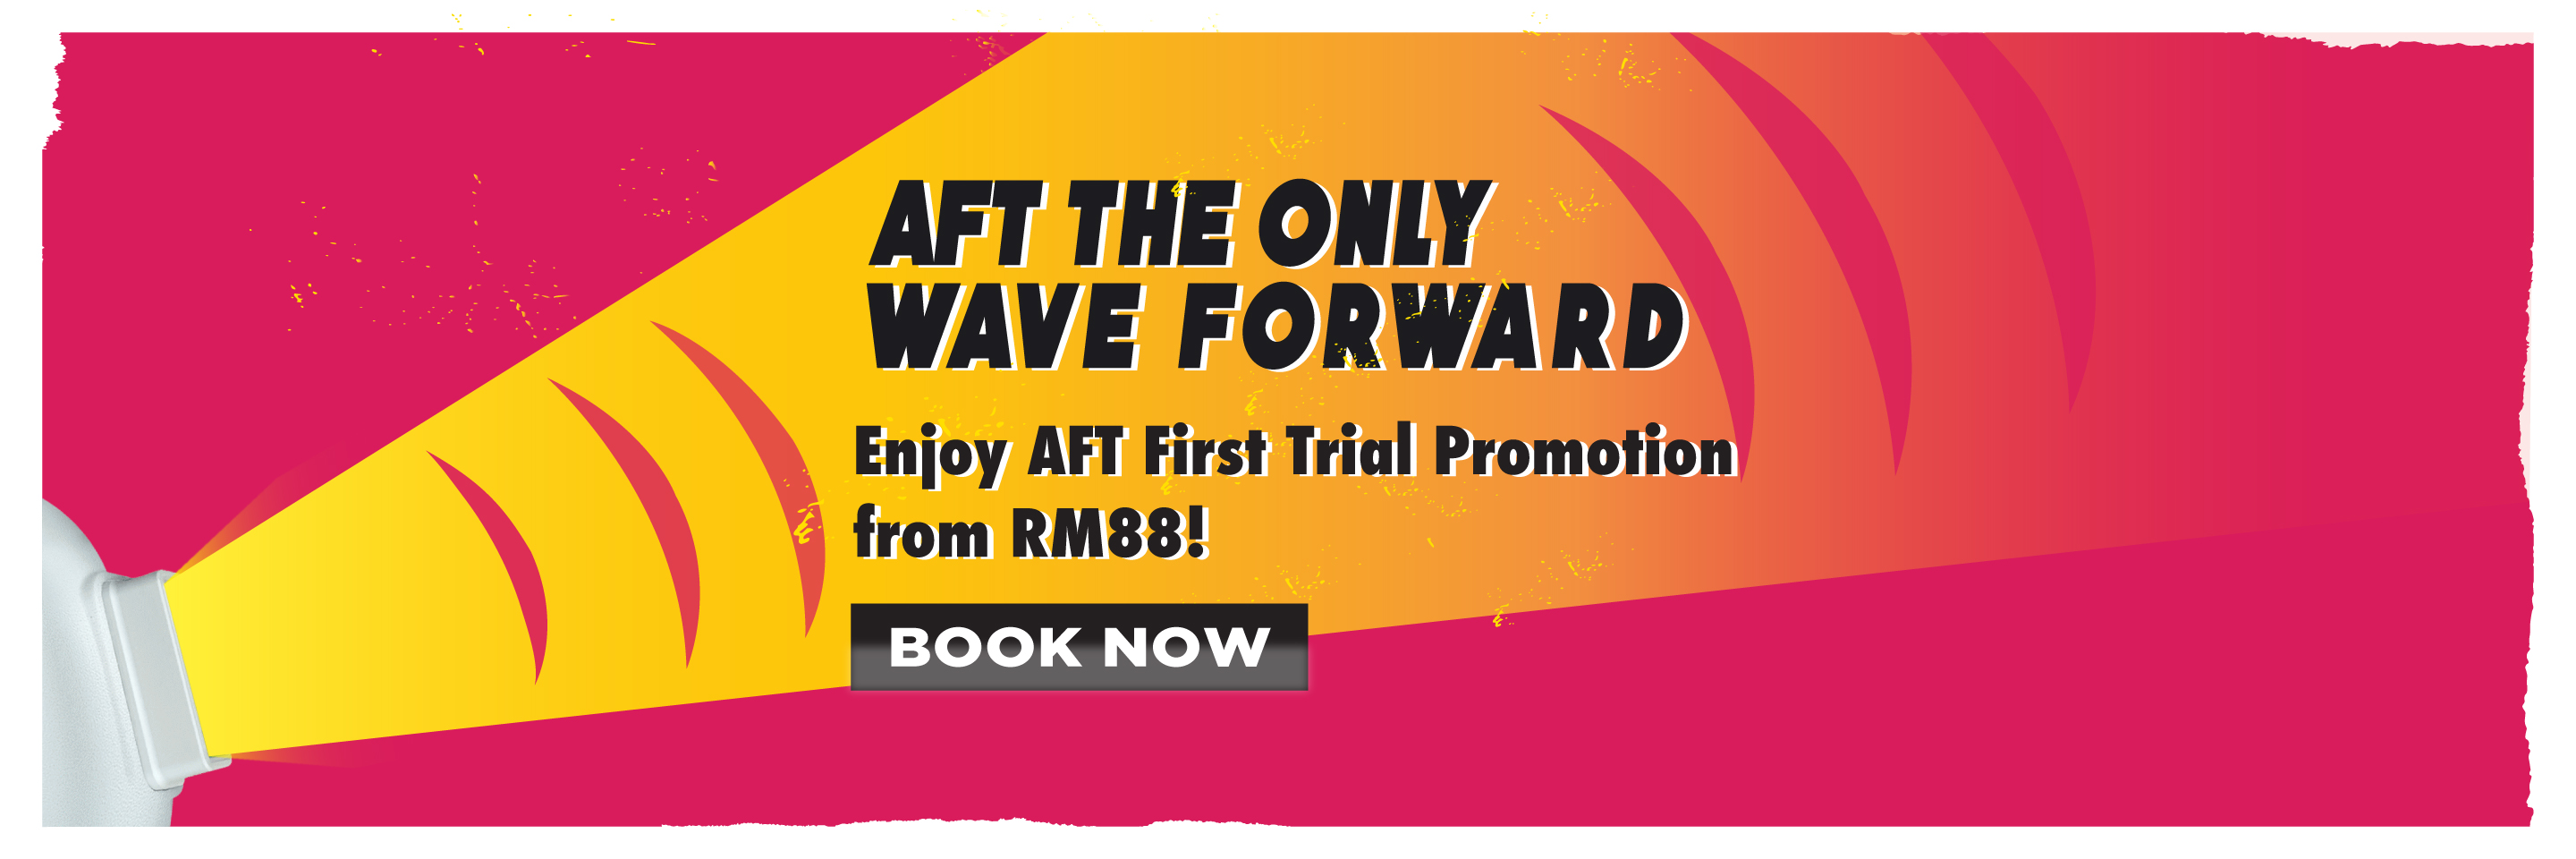 AFT The Only Wave Forward - Lead Gen Jan 2021